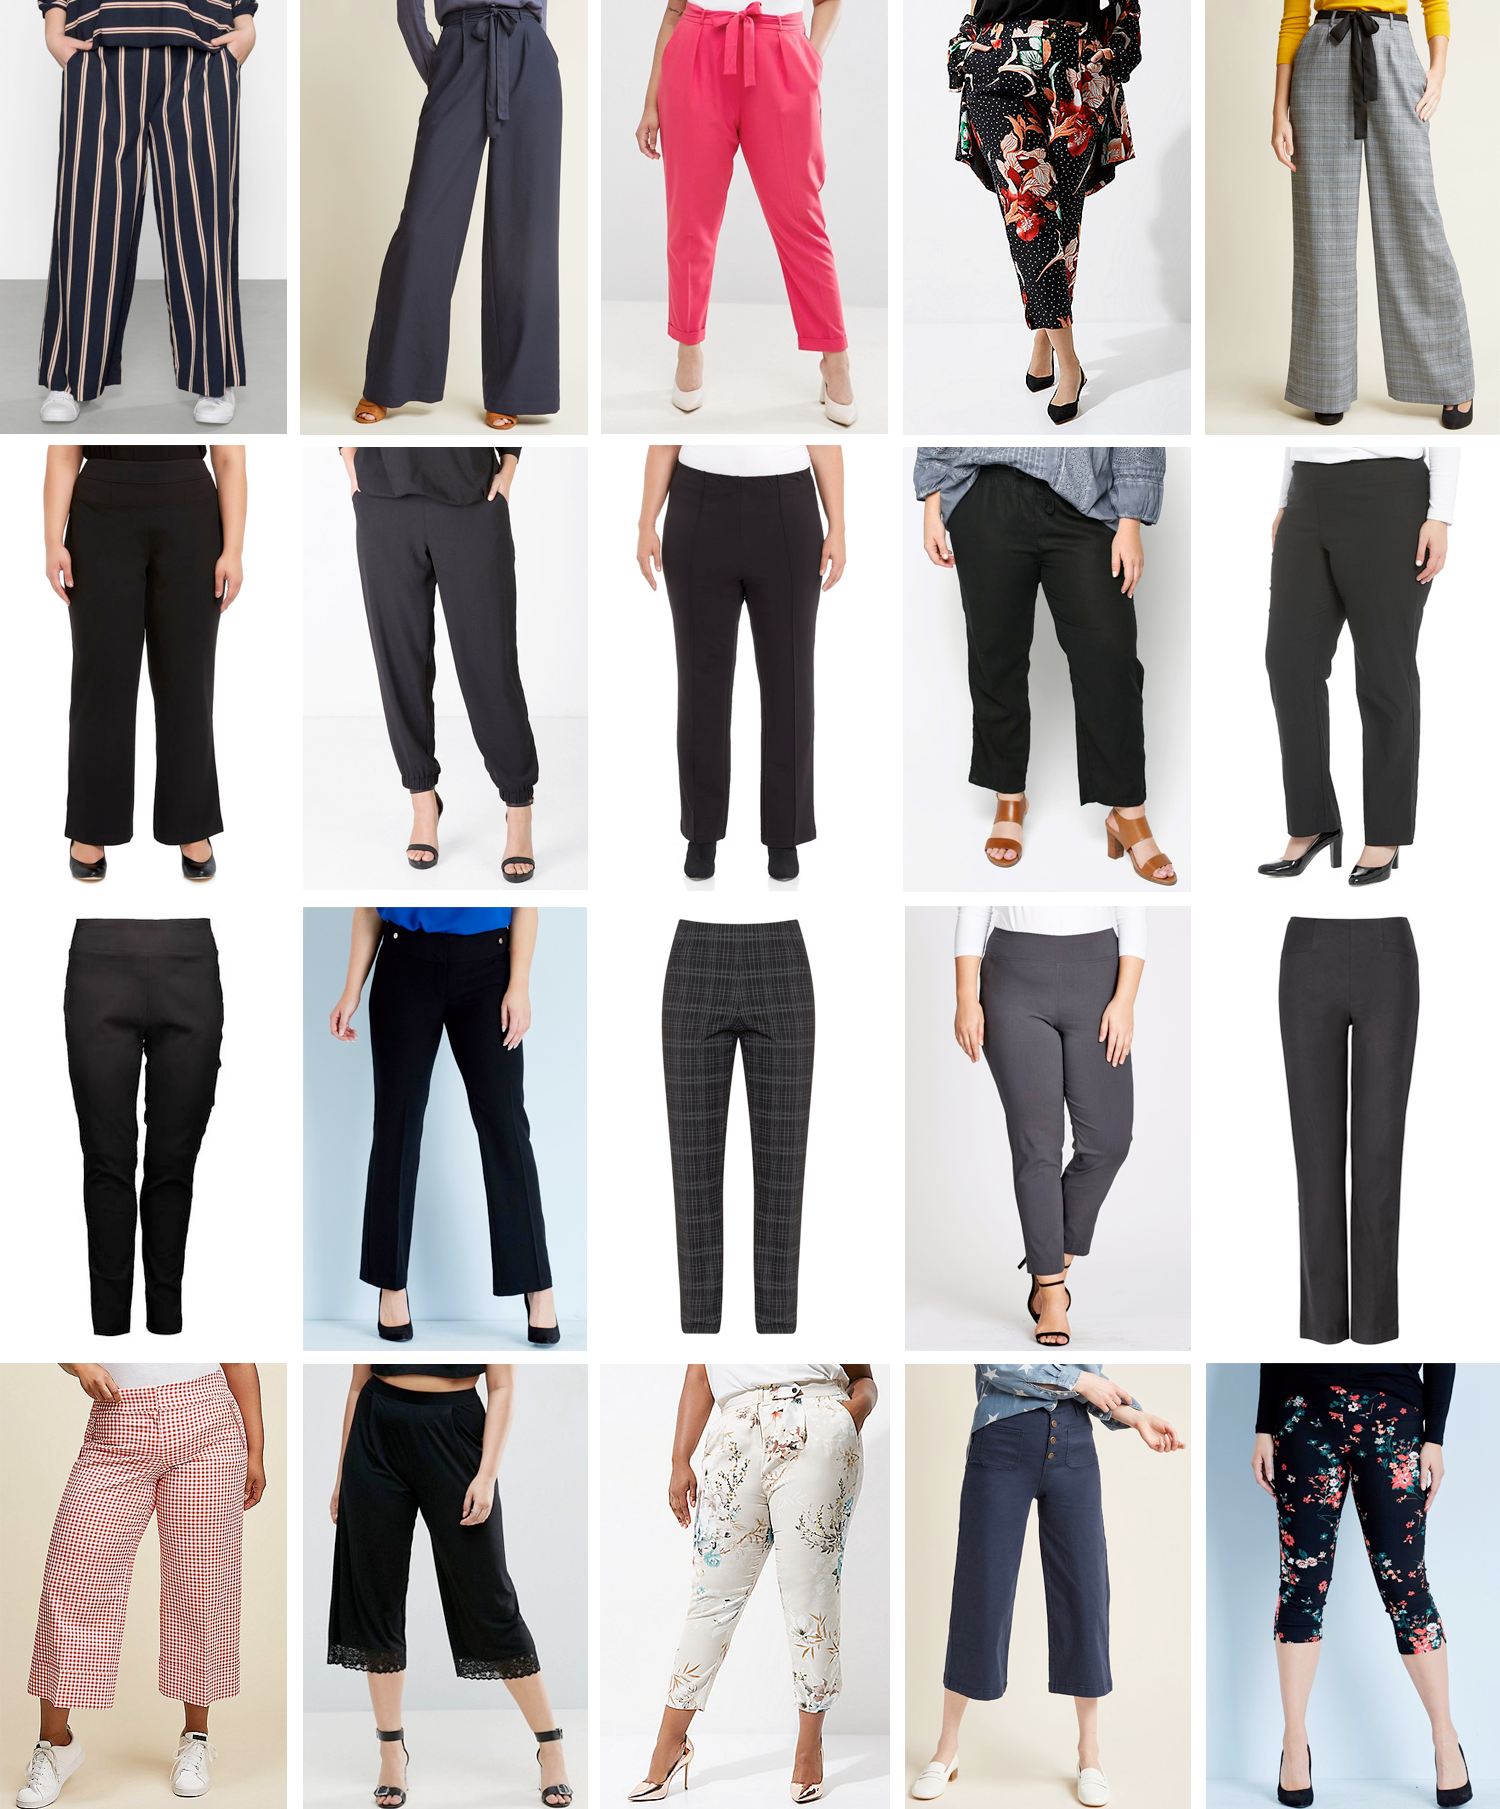 Plus size workwear trousers, officewear, wide legged trousers, ponte pants, cropped trousers, corporate wardrobe